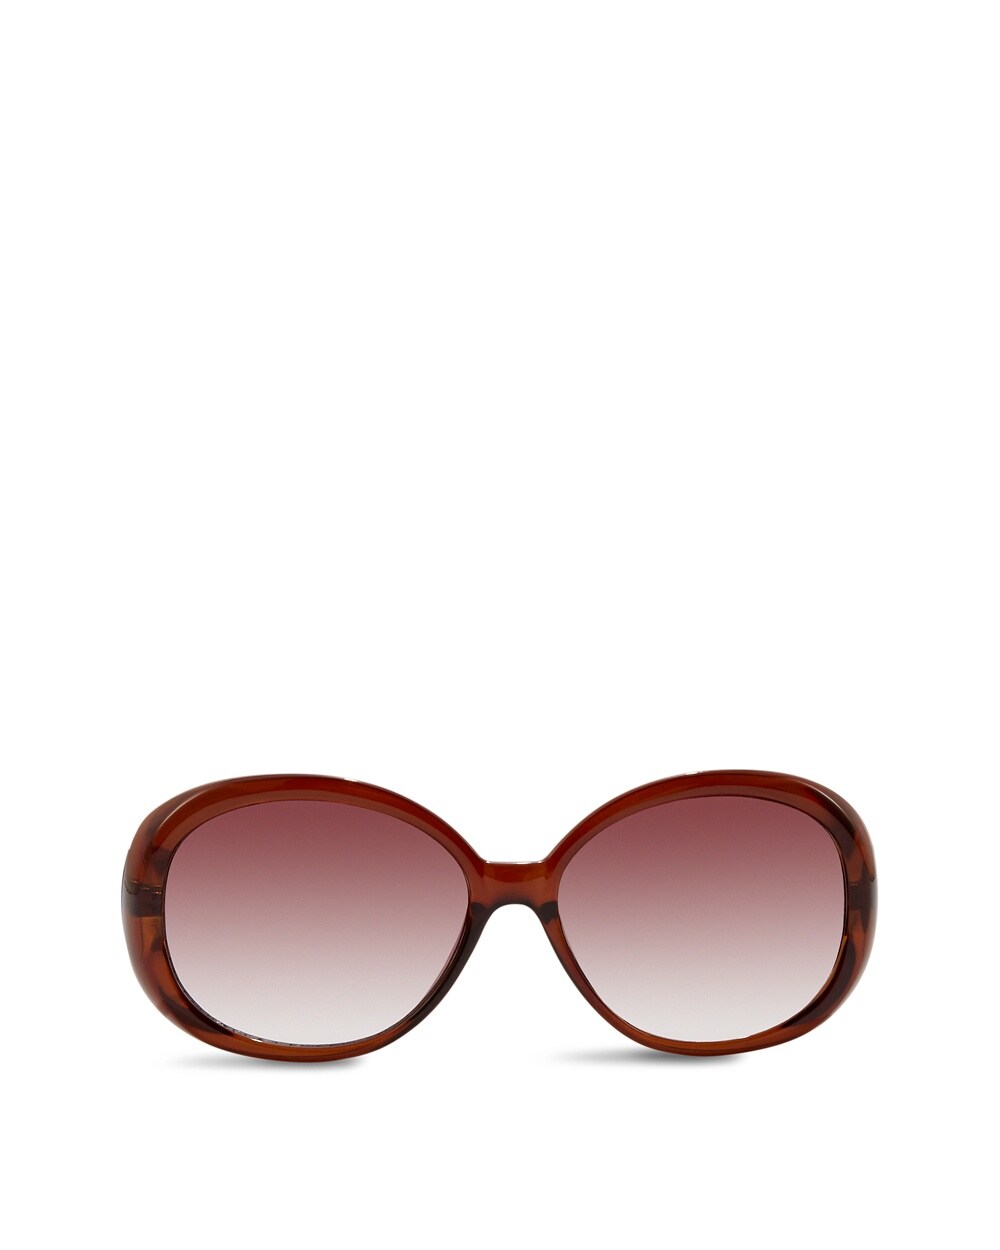 Ophelia Brown Sunglasses